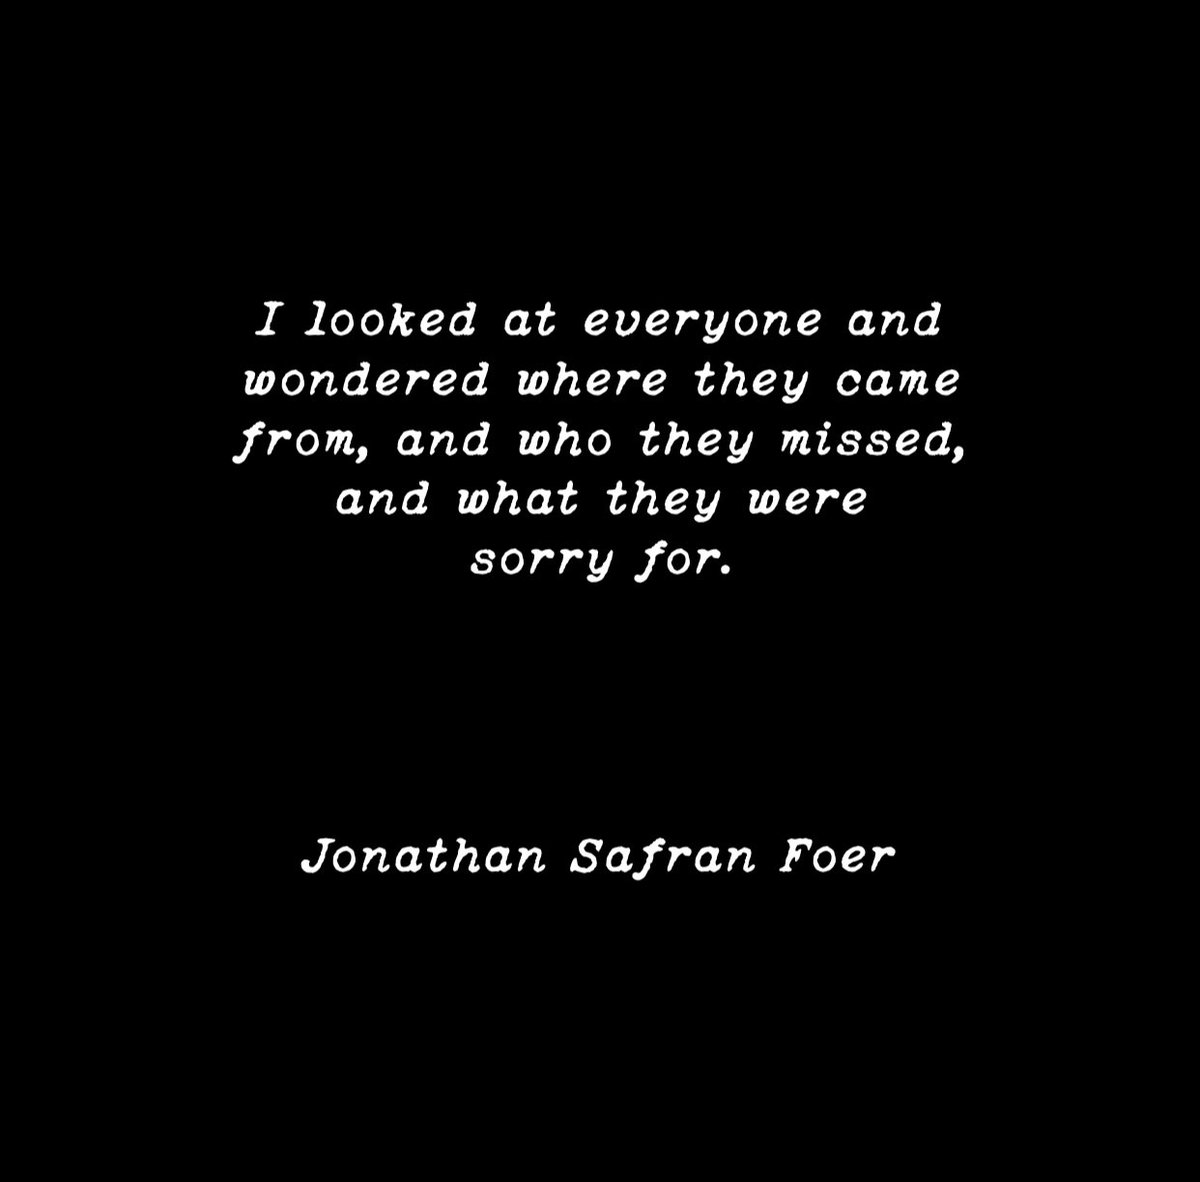 #jonathansafranfoer #quote